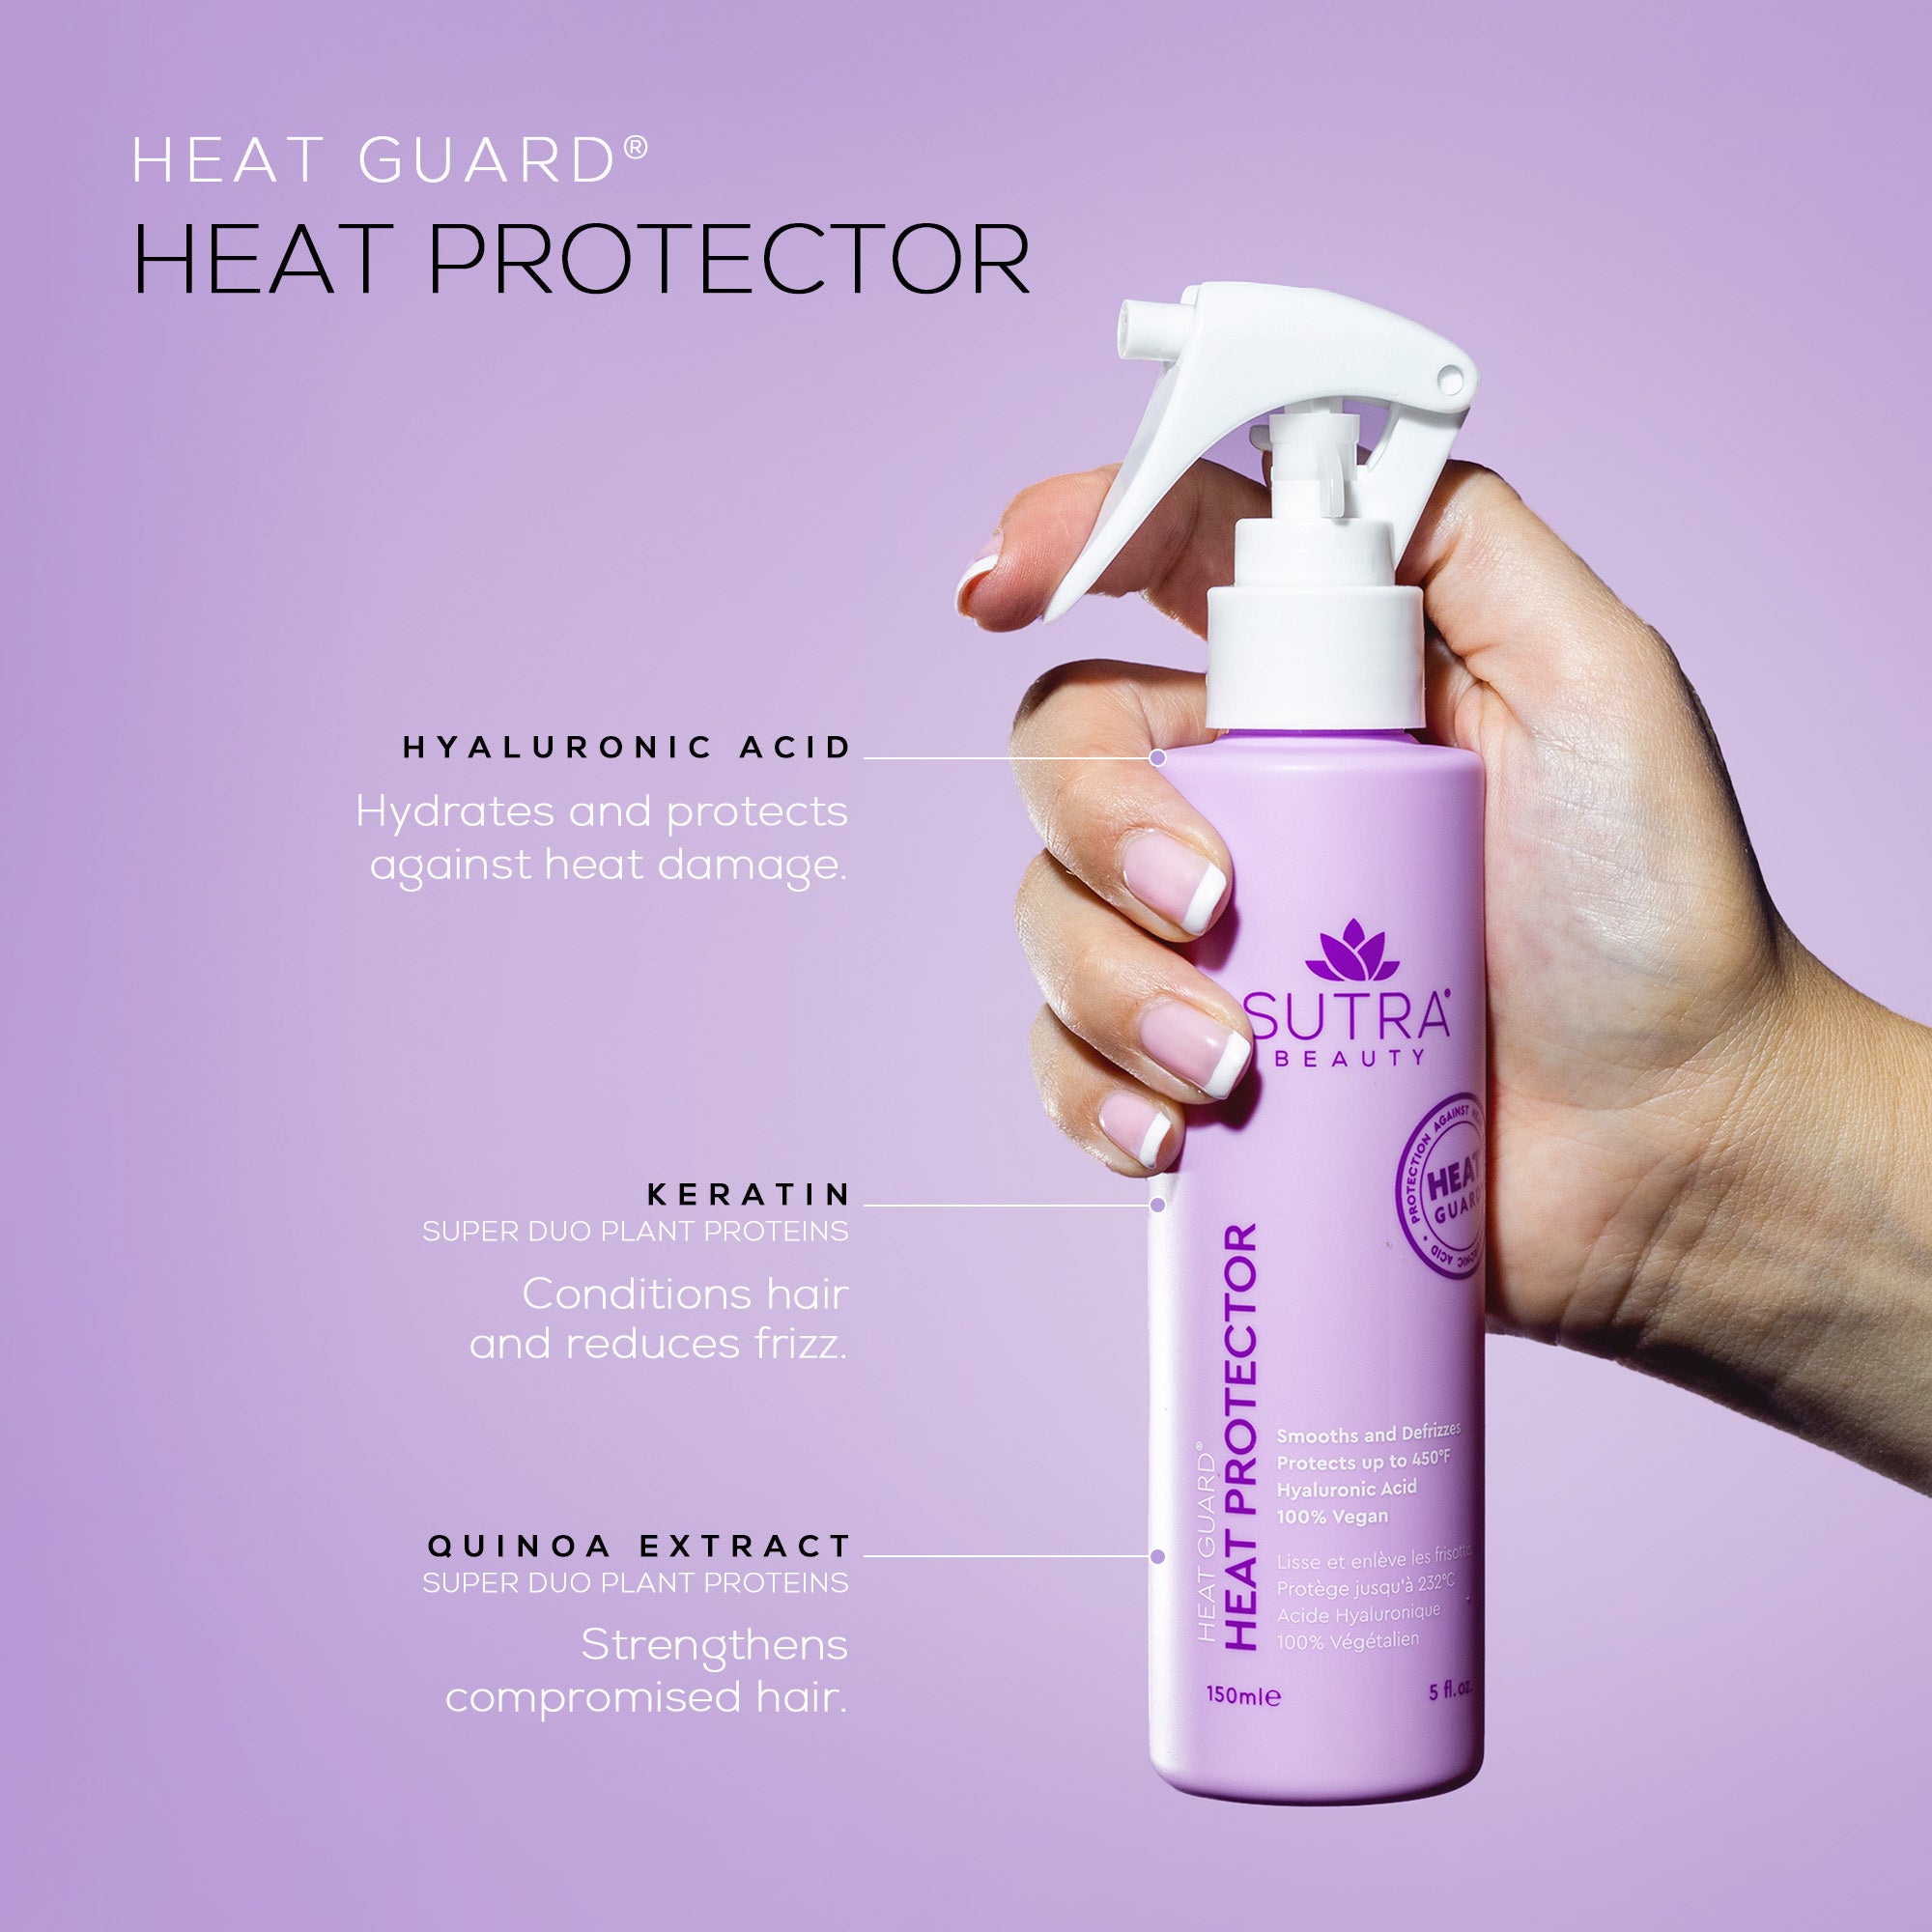 Sutra Heat Guard Heat Protector